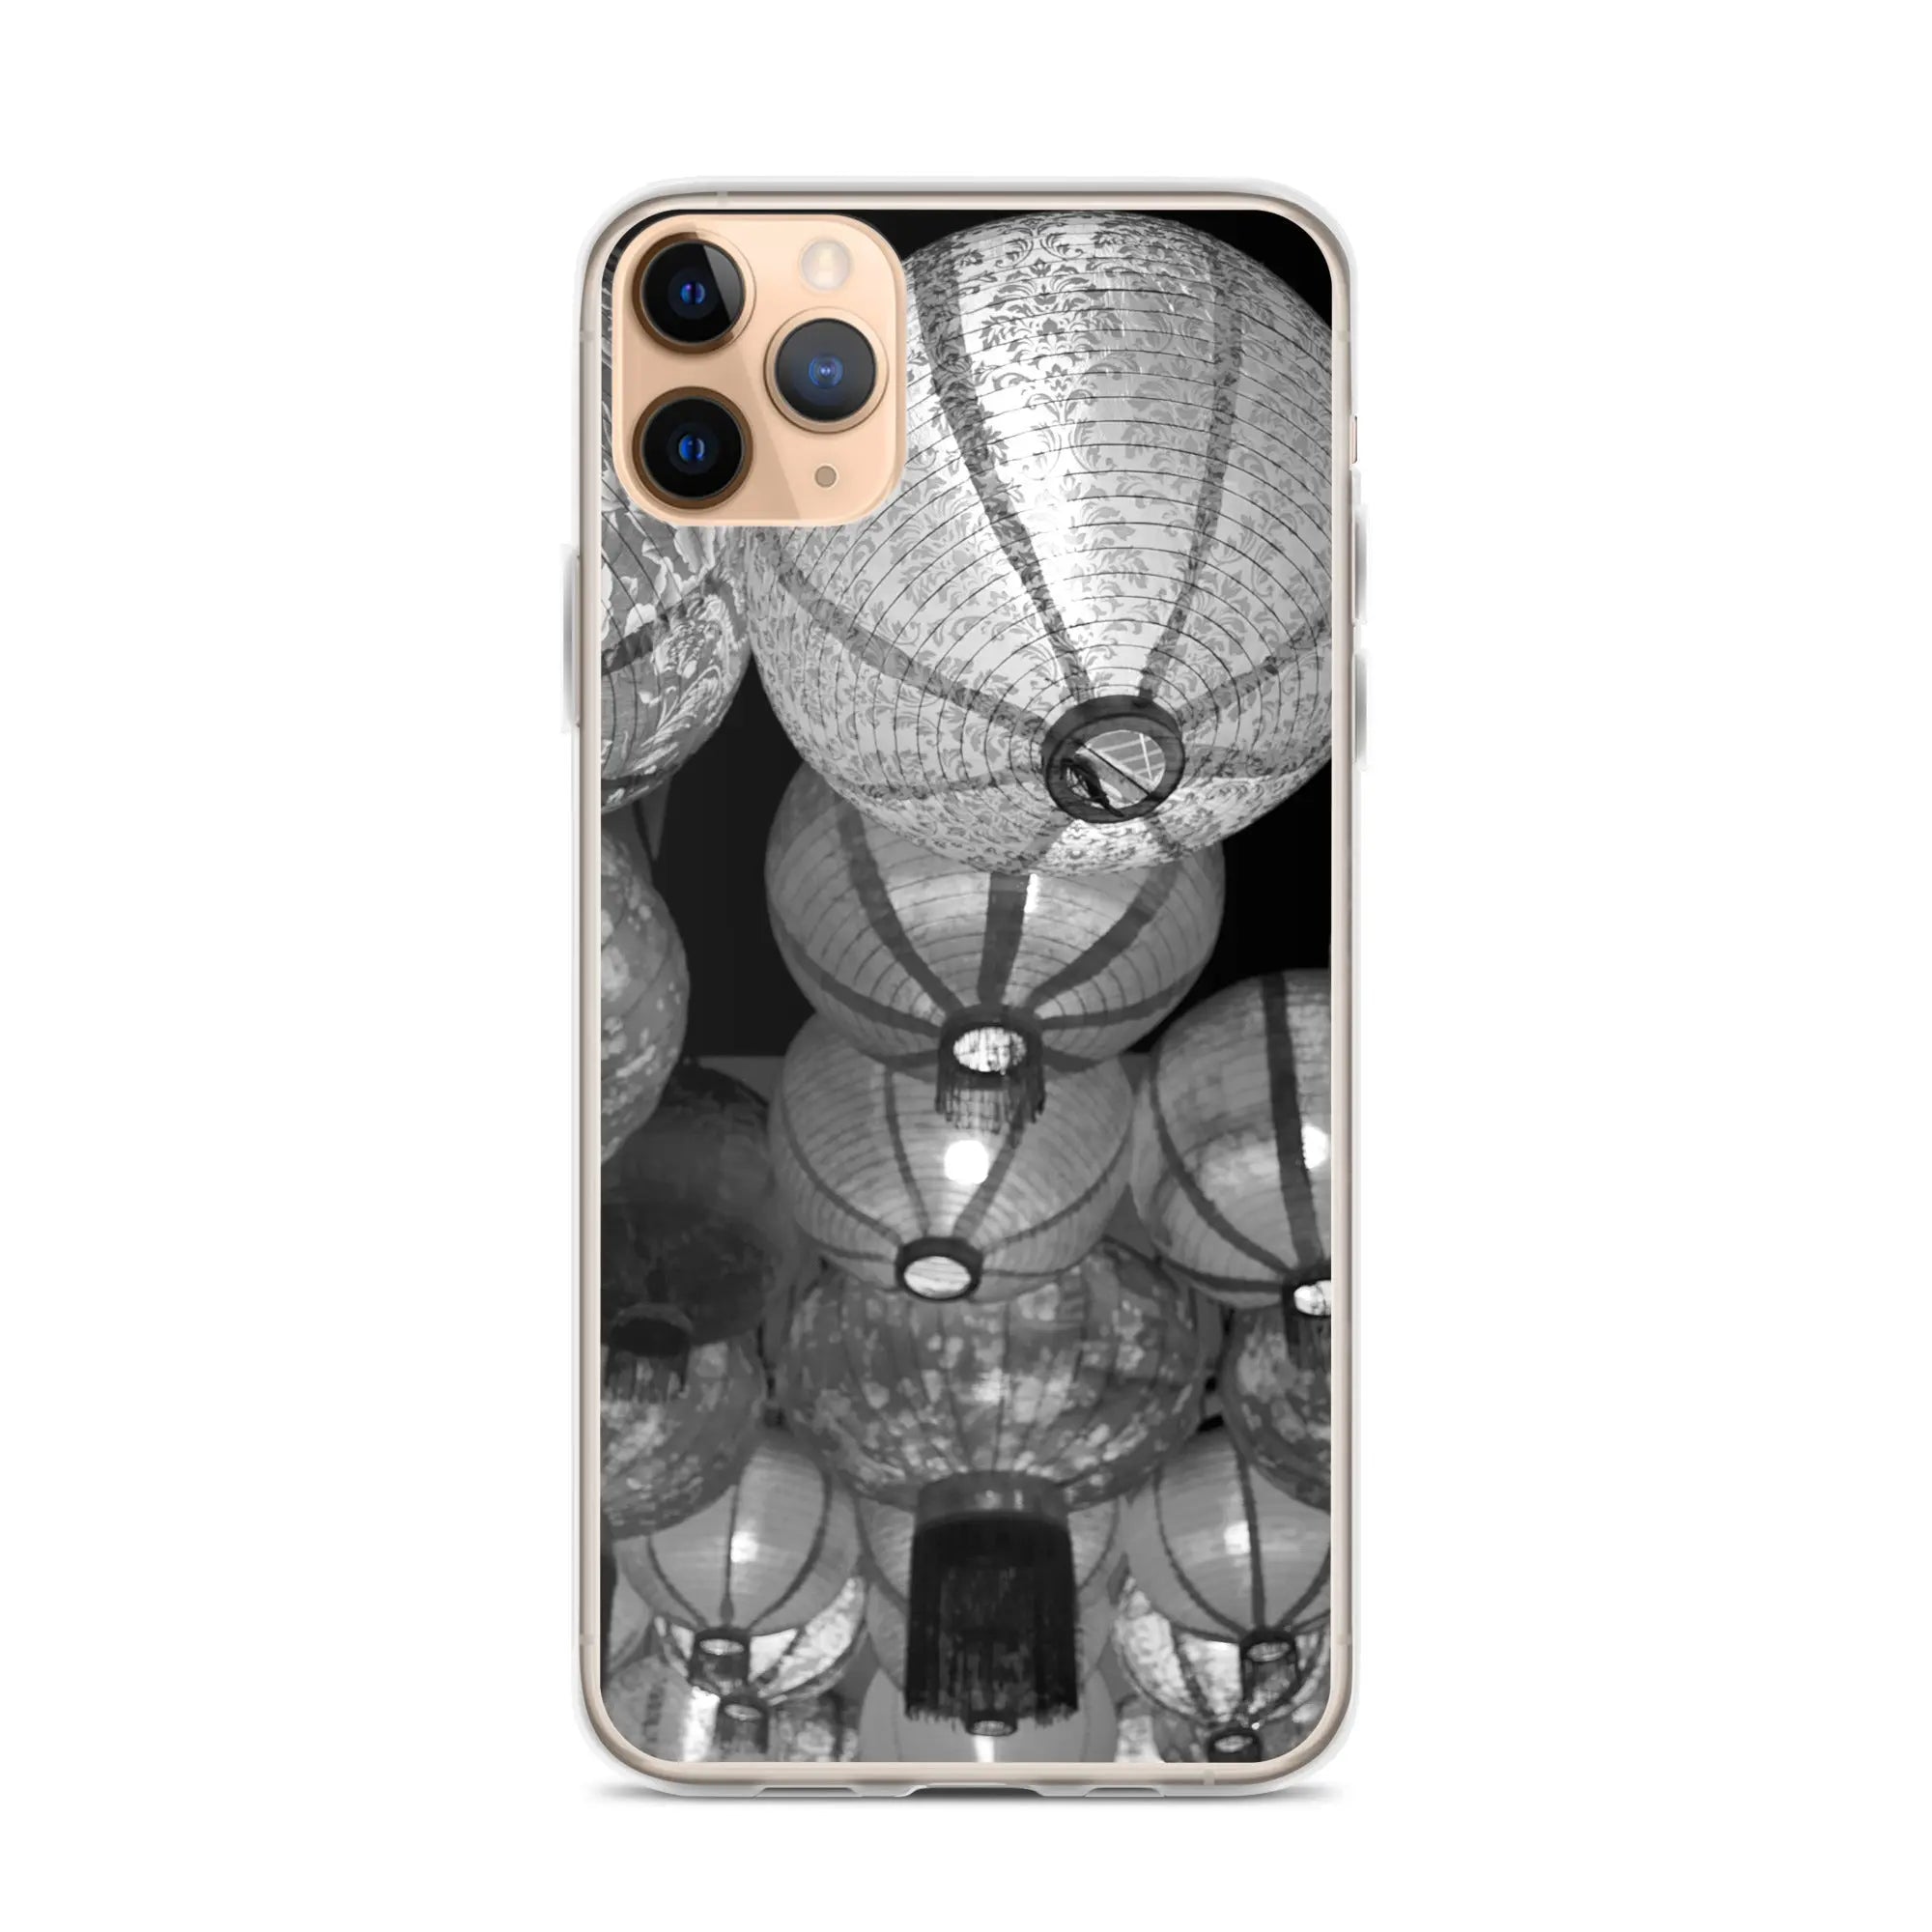 Raise The Red Lanterns - Designer Travels Art Iphone Case - Black And White - Mobile Phone Cases - Aesthetic Art